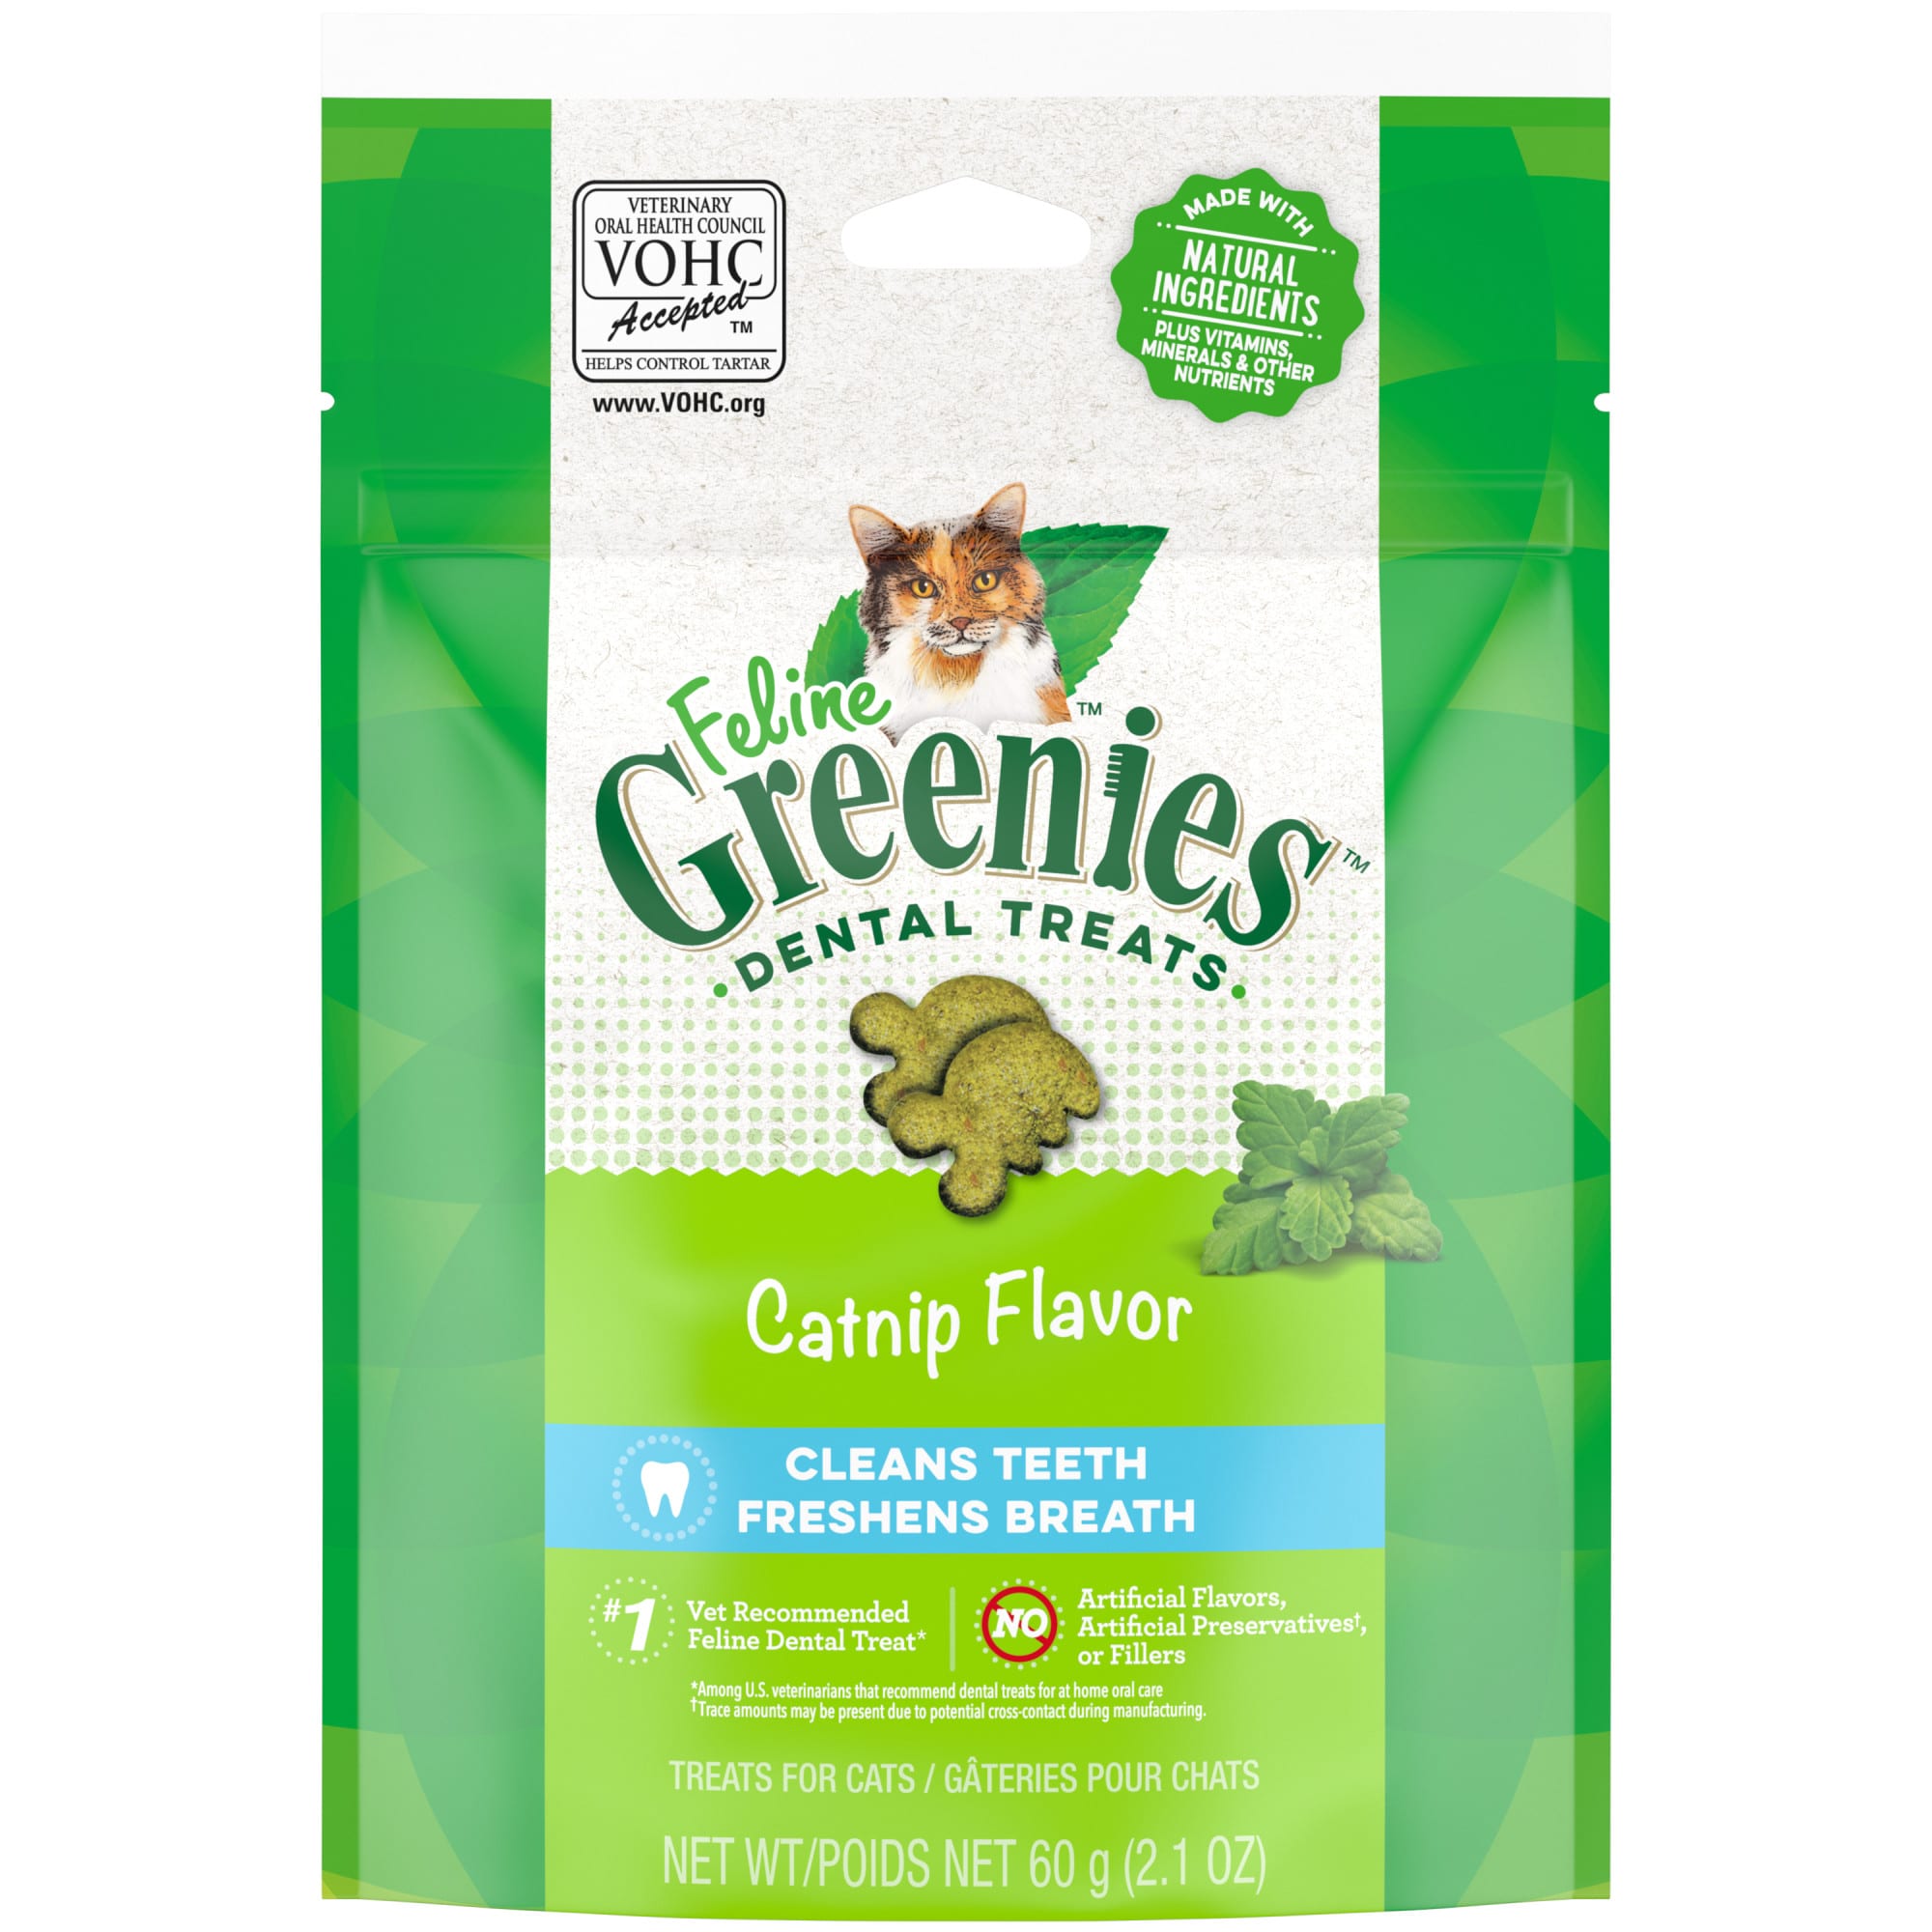 Feline Greenies Catnip Flavor Adult Dental Cat Treats, 2.1 oz. Petco